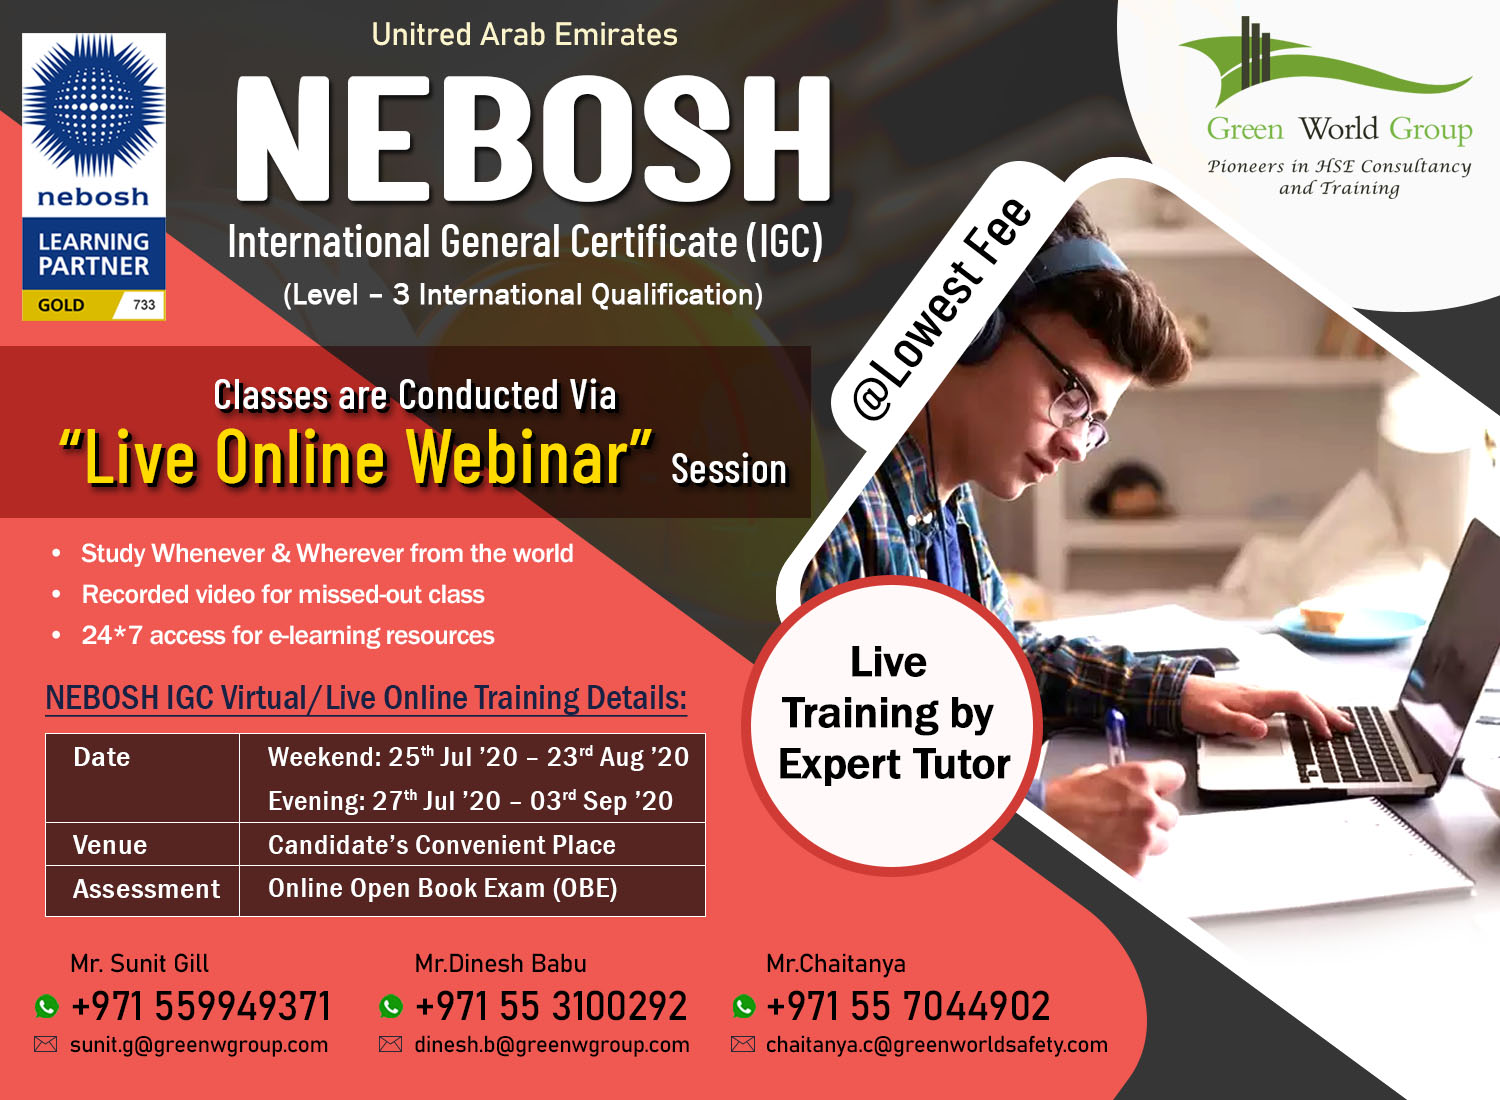 NEBOSH International General Certificate (IGC)